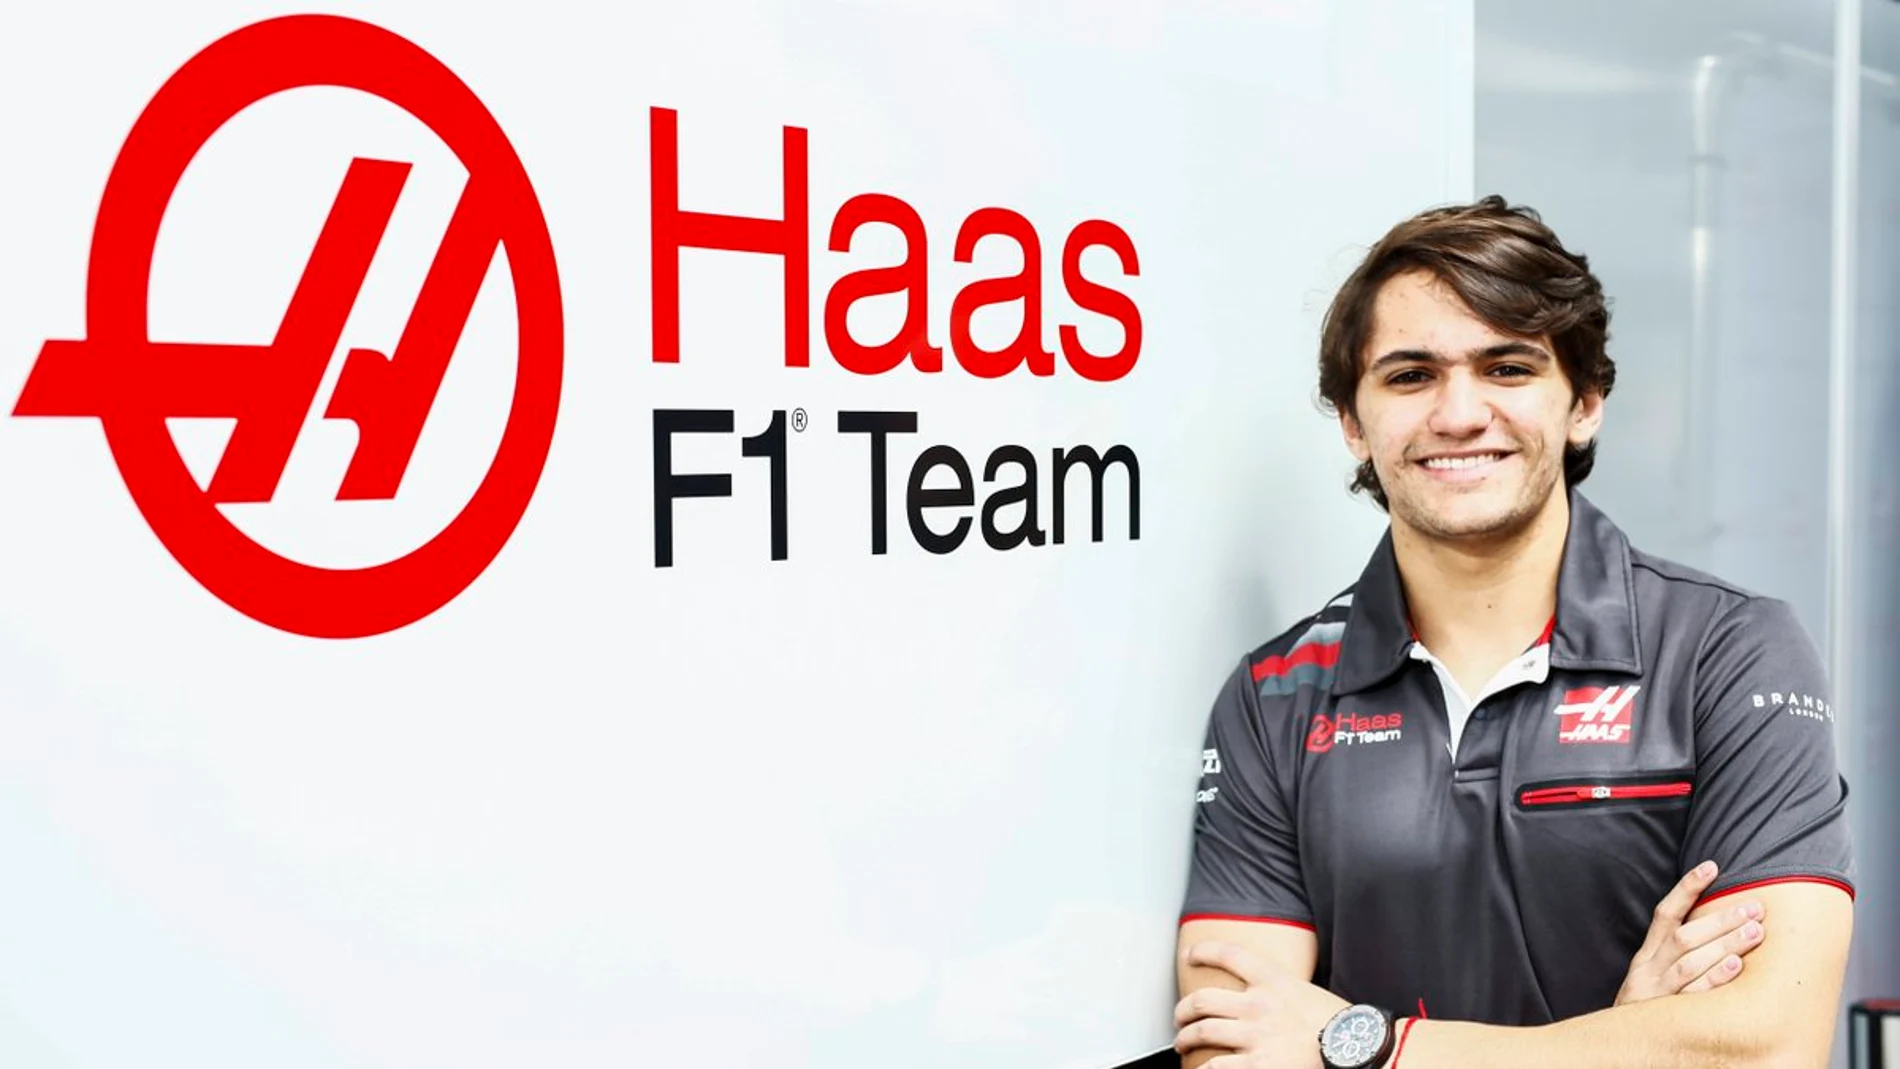 Pietro Fittipaldi, piloto probador de Haas